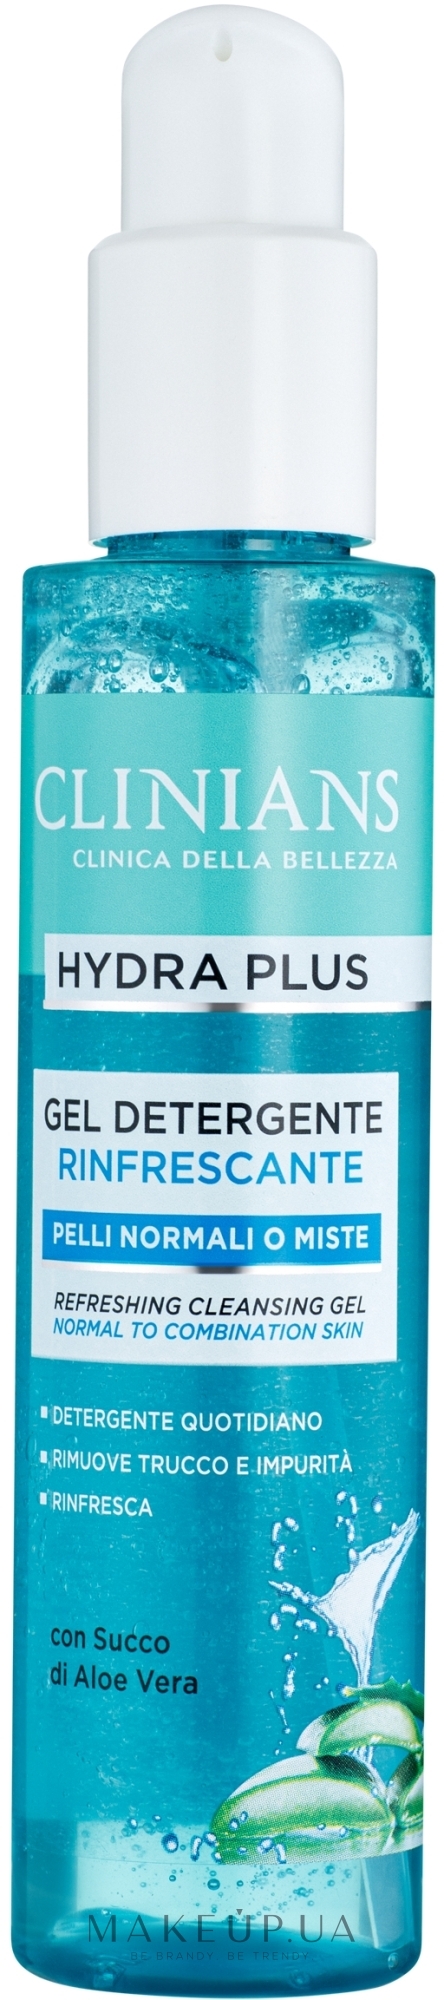 Гель для умывания очищаючий - Clinians Gel Detergente Rinfrescante Minerali e Acqua Vegetale di The Bianco — фото 150ml